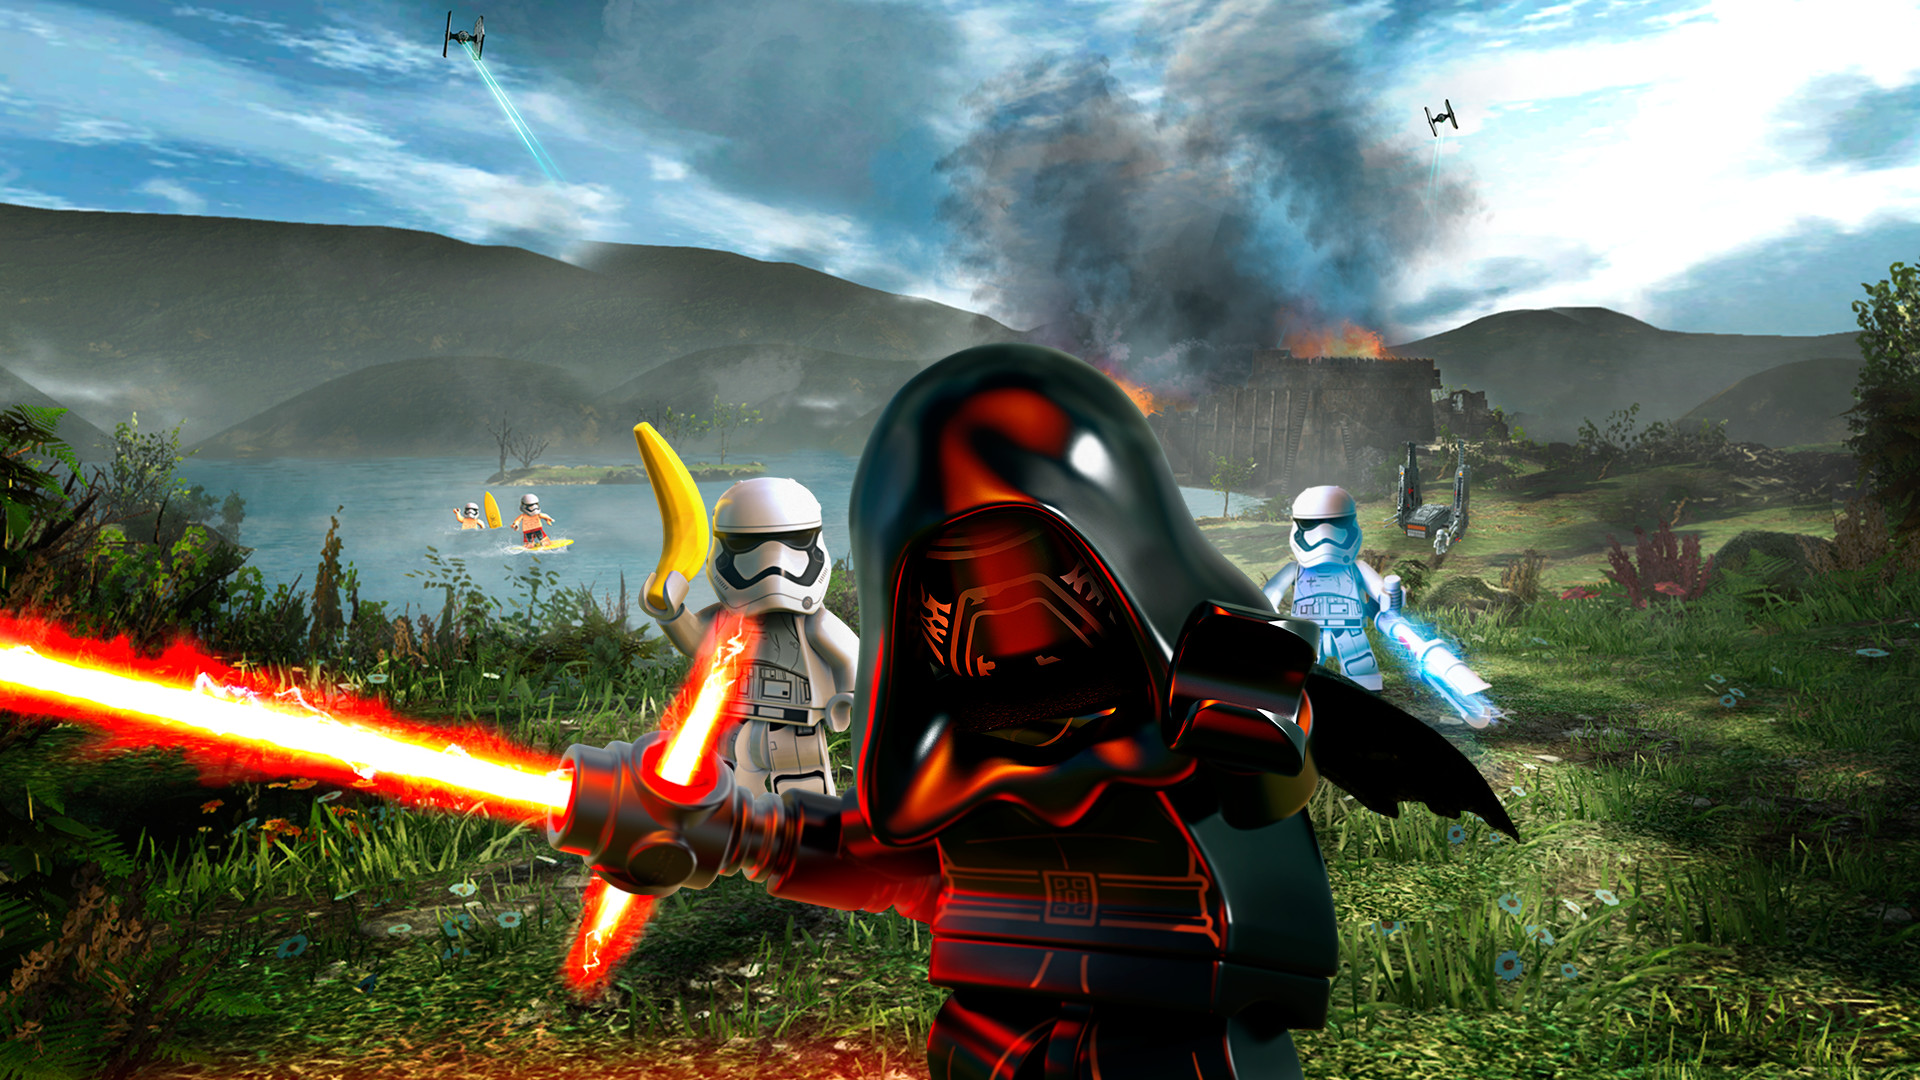 LEGO Star Wars: The Force Awakens - First Order Siege of Takodana Level Pack DLC Steam CD Key 2.25 $